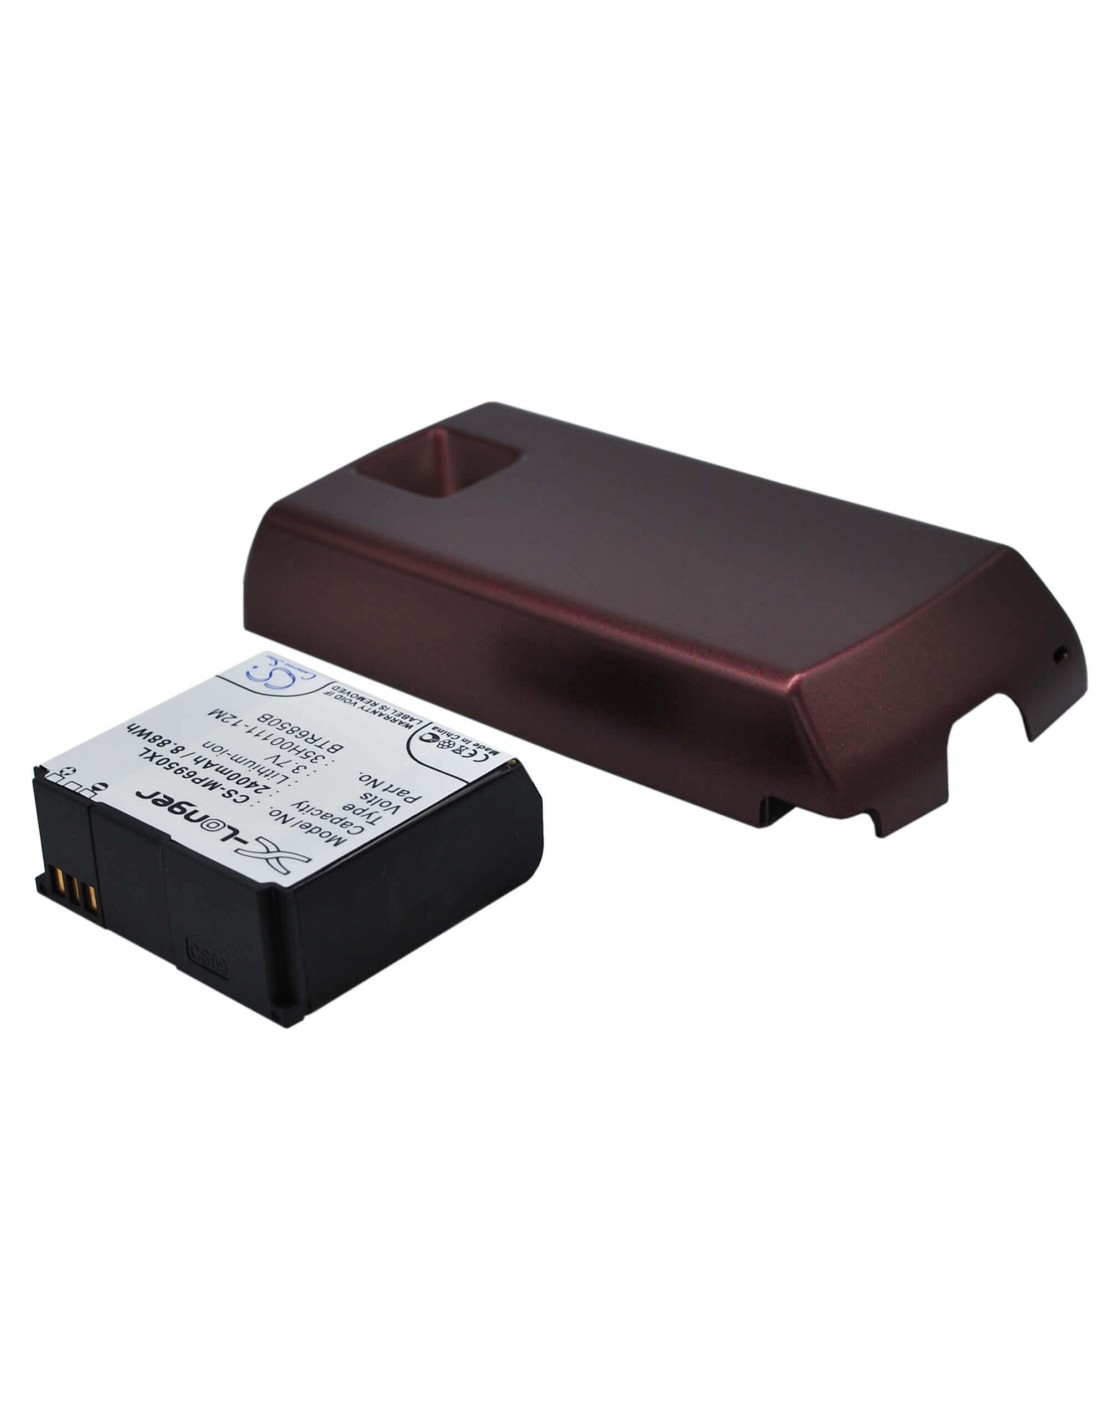 Battery for Sprint Diamond Pro, Vx6950, Ppc6850 3.7V, 2400mAh - 8.88Wh